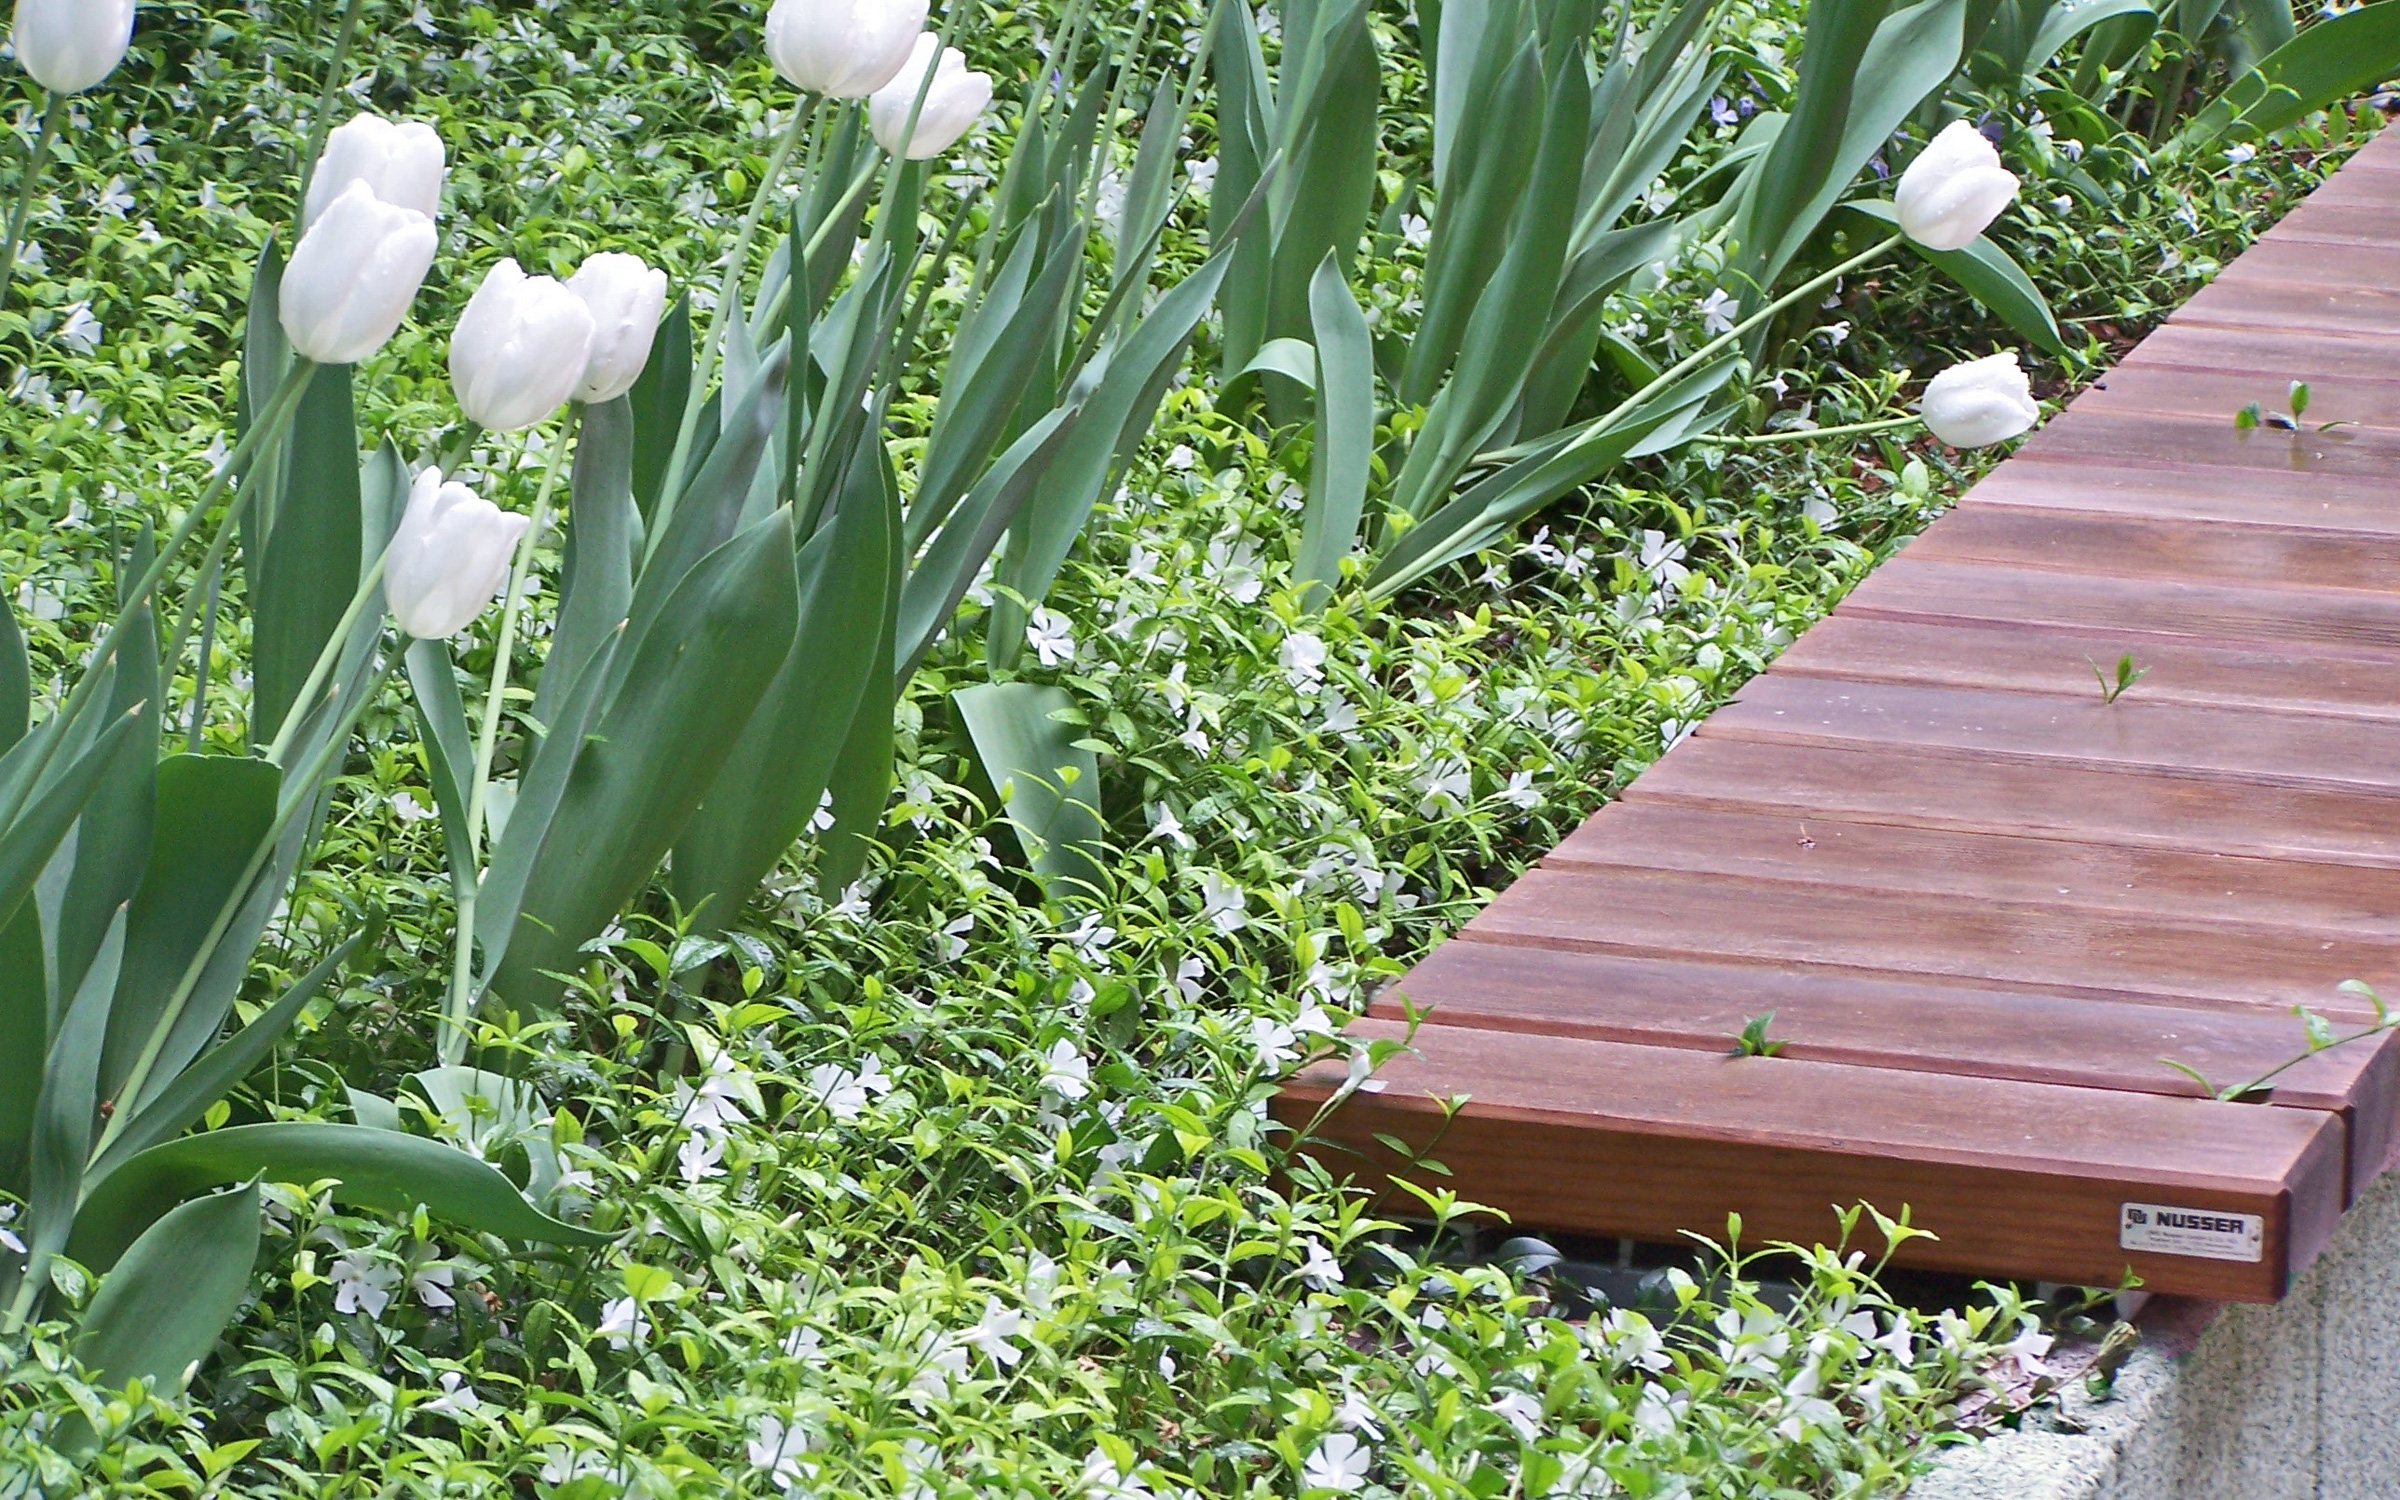 Bench beside white tulips and Vinca Alba